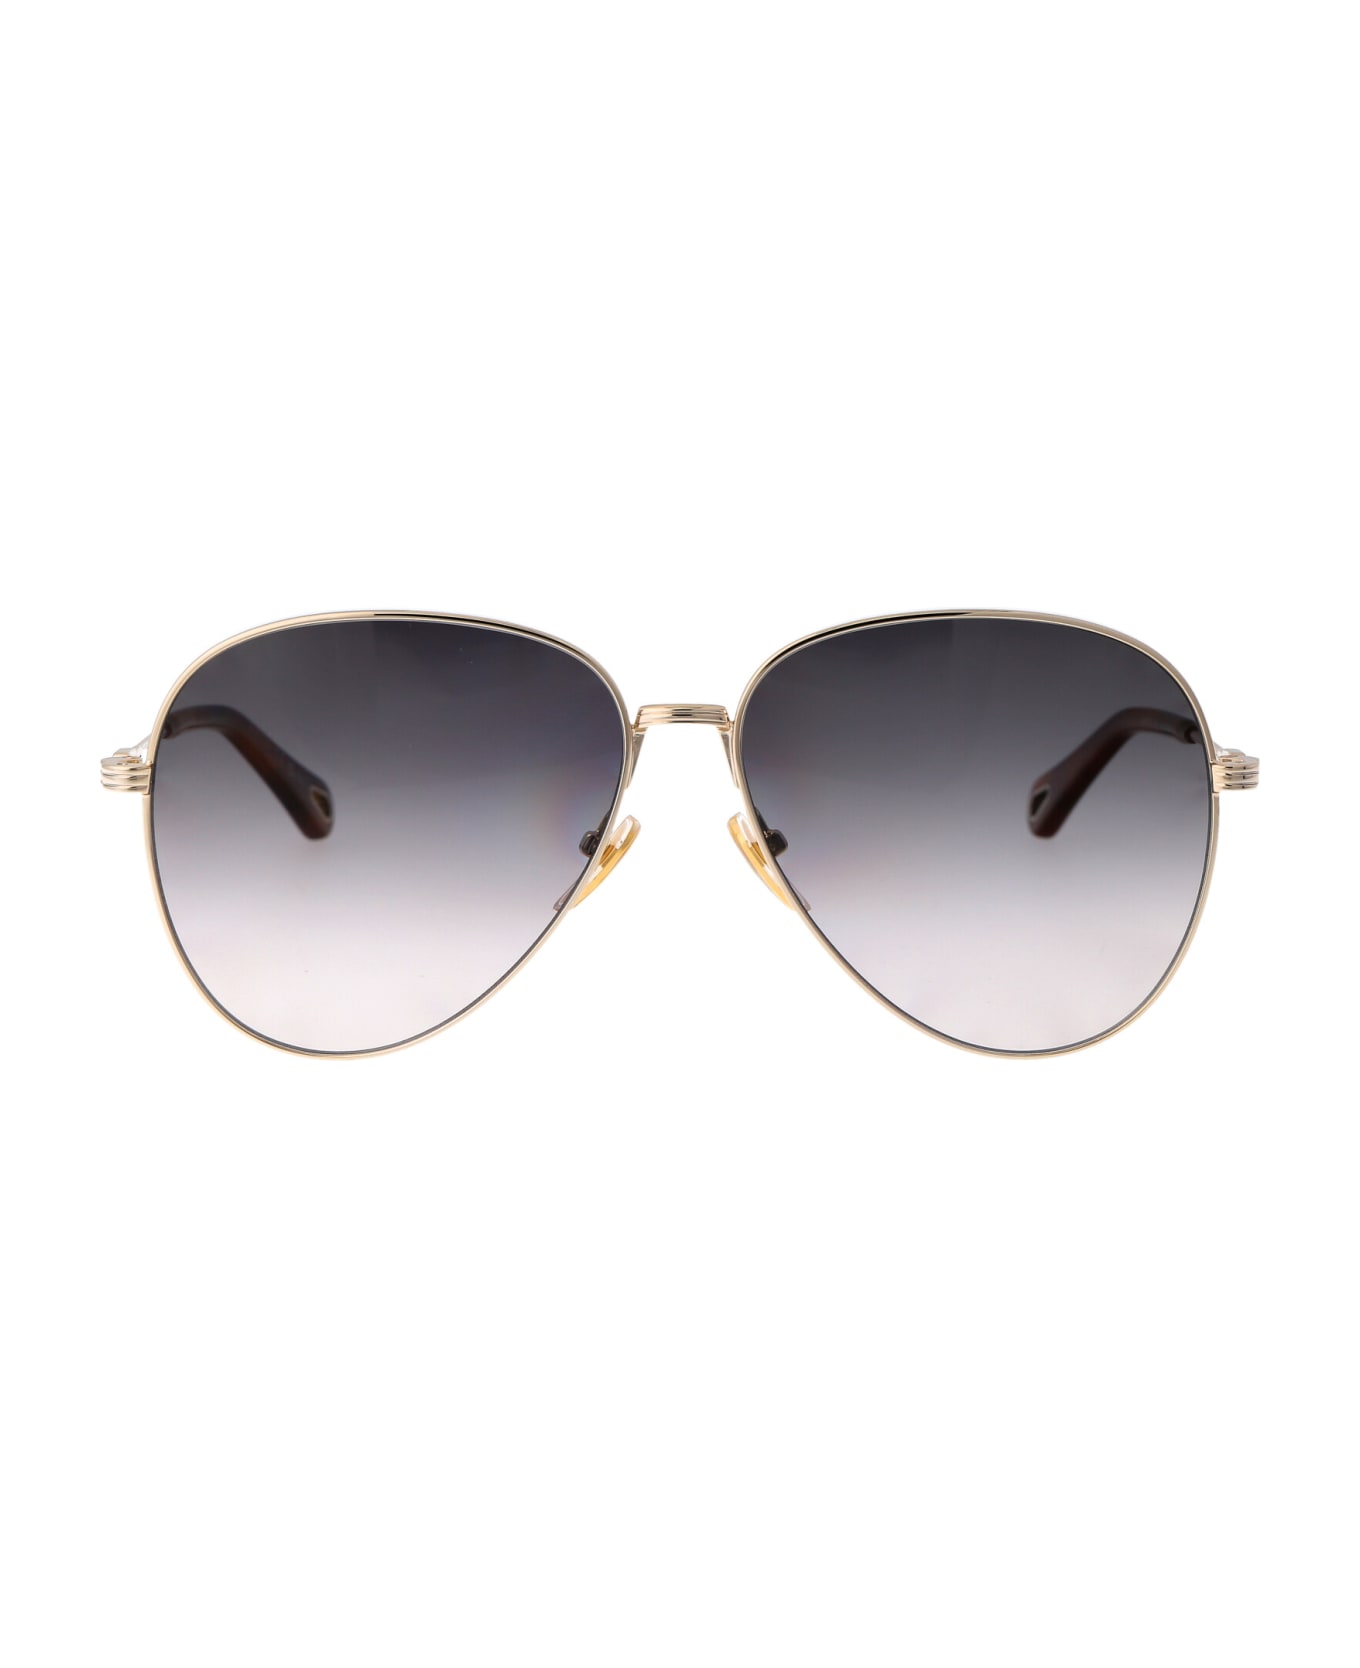 Chloé Eyewear Ch0177s Sunglasses - 001 GOLD GOLD GREY サングラス